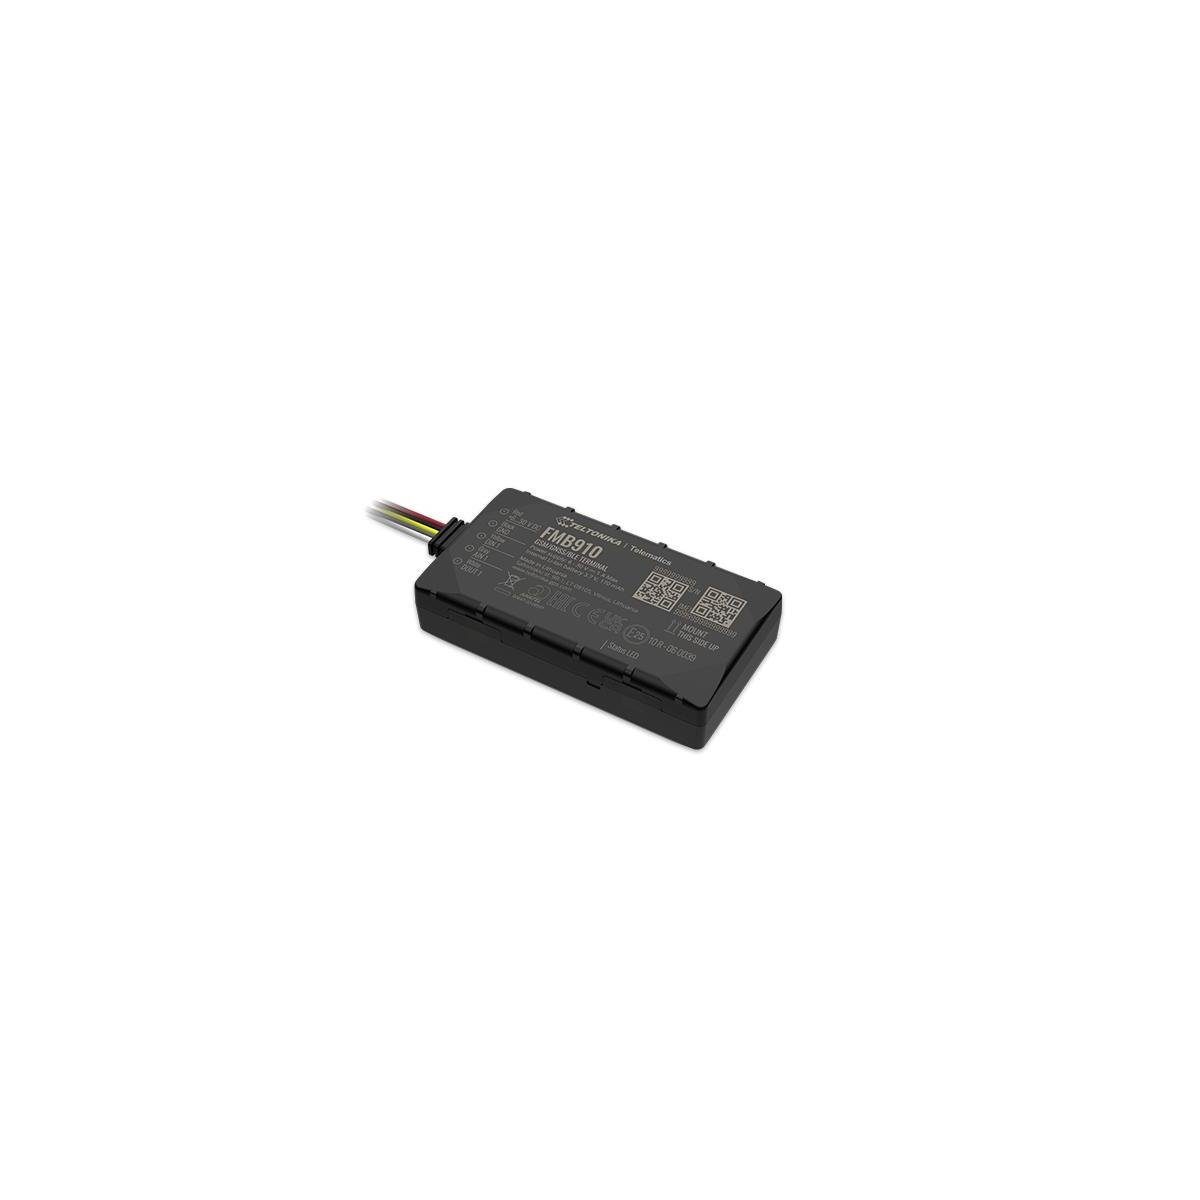 Smart FMB91093IN01 - Tracker GPS-Tracker mit Backup-Batterie Teltonika interner